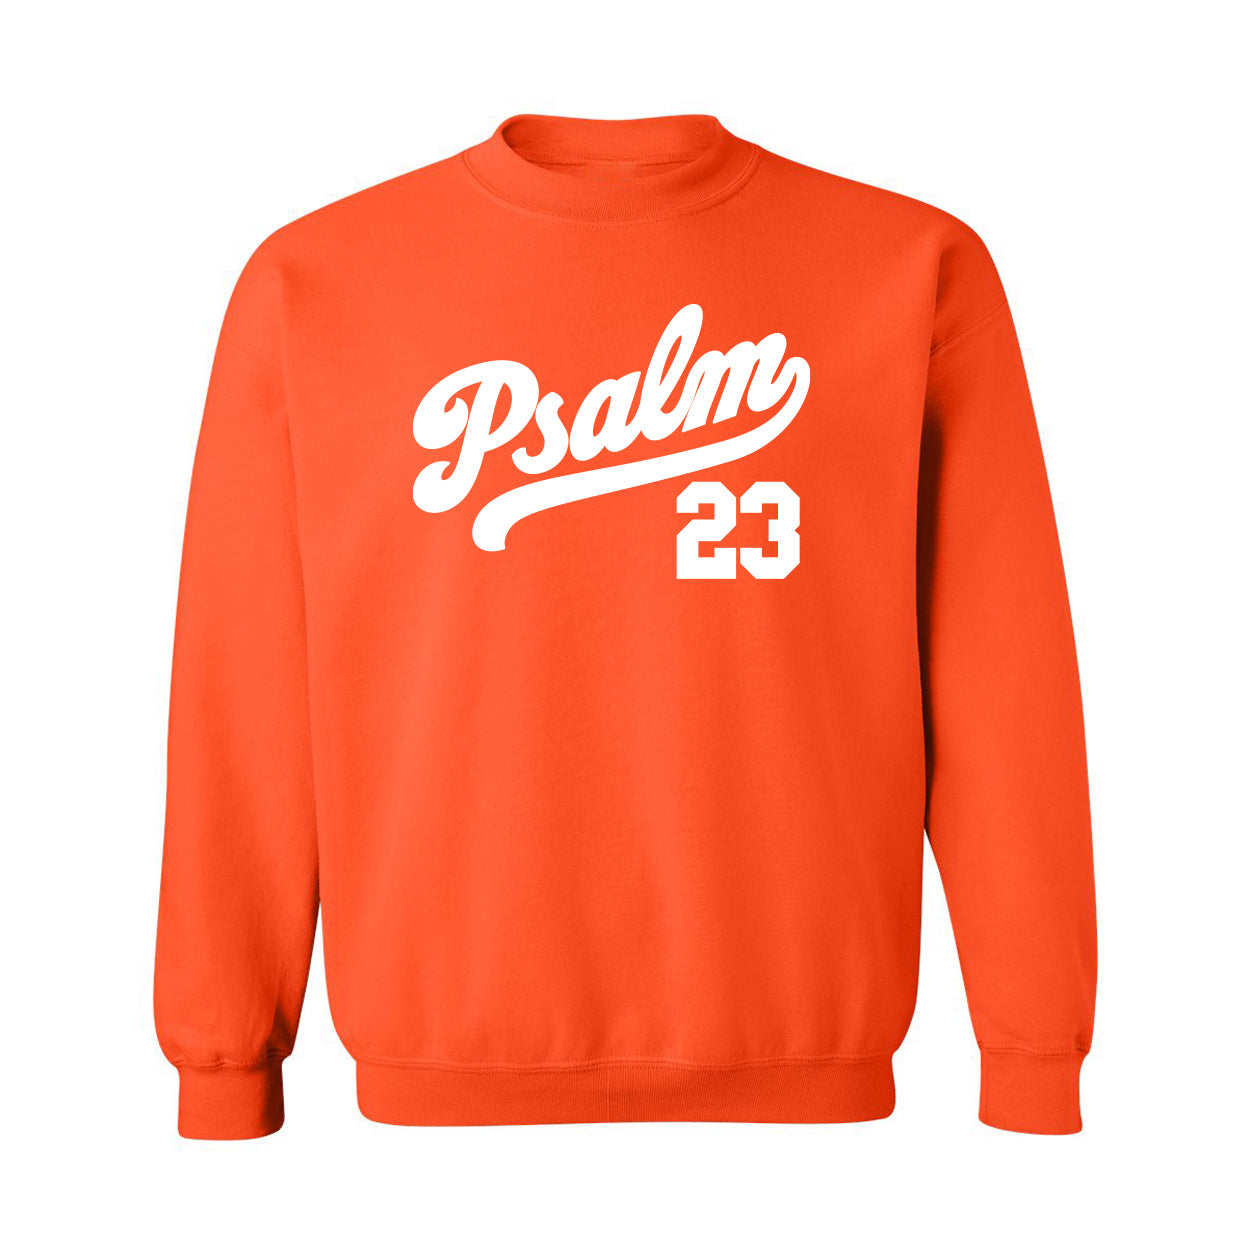 Psalm 23 Sweatshirt Crewnecks - All Colors